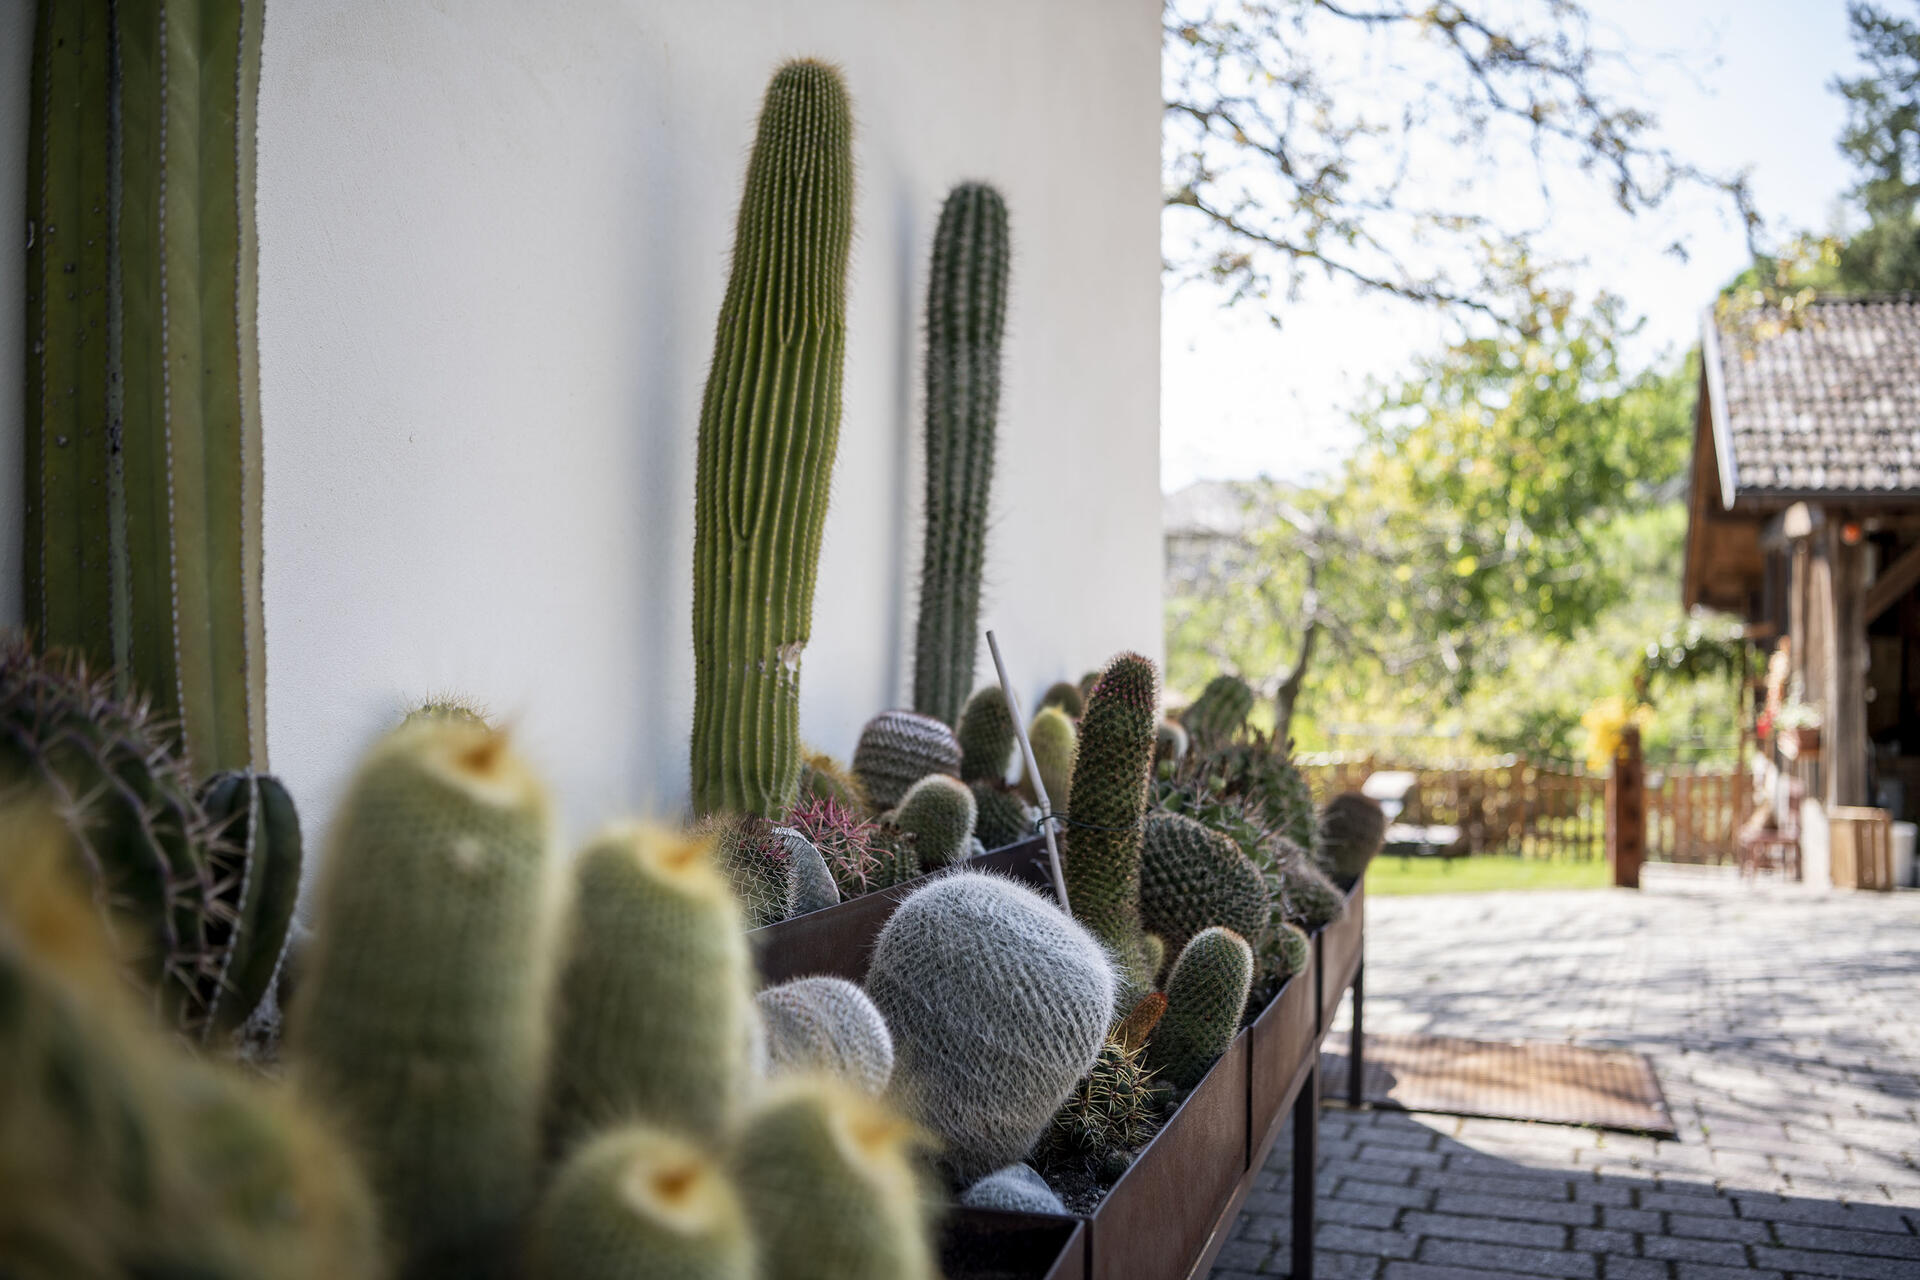 Cacti in the yard